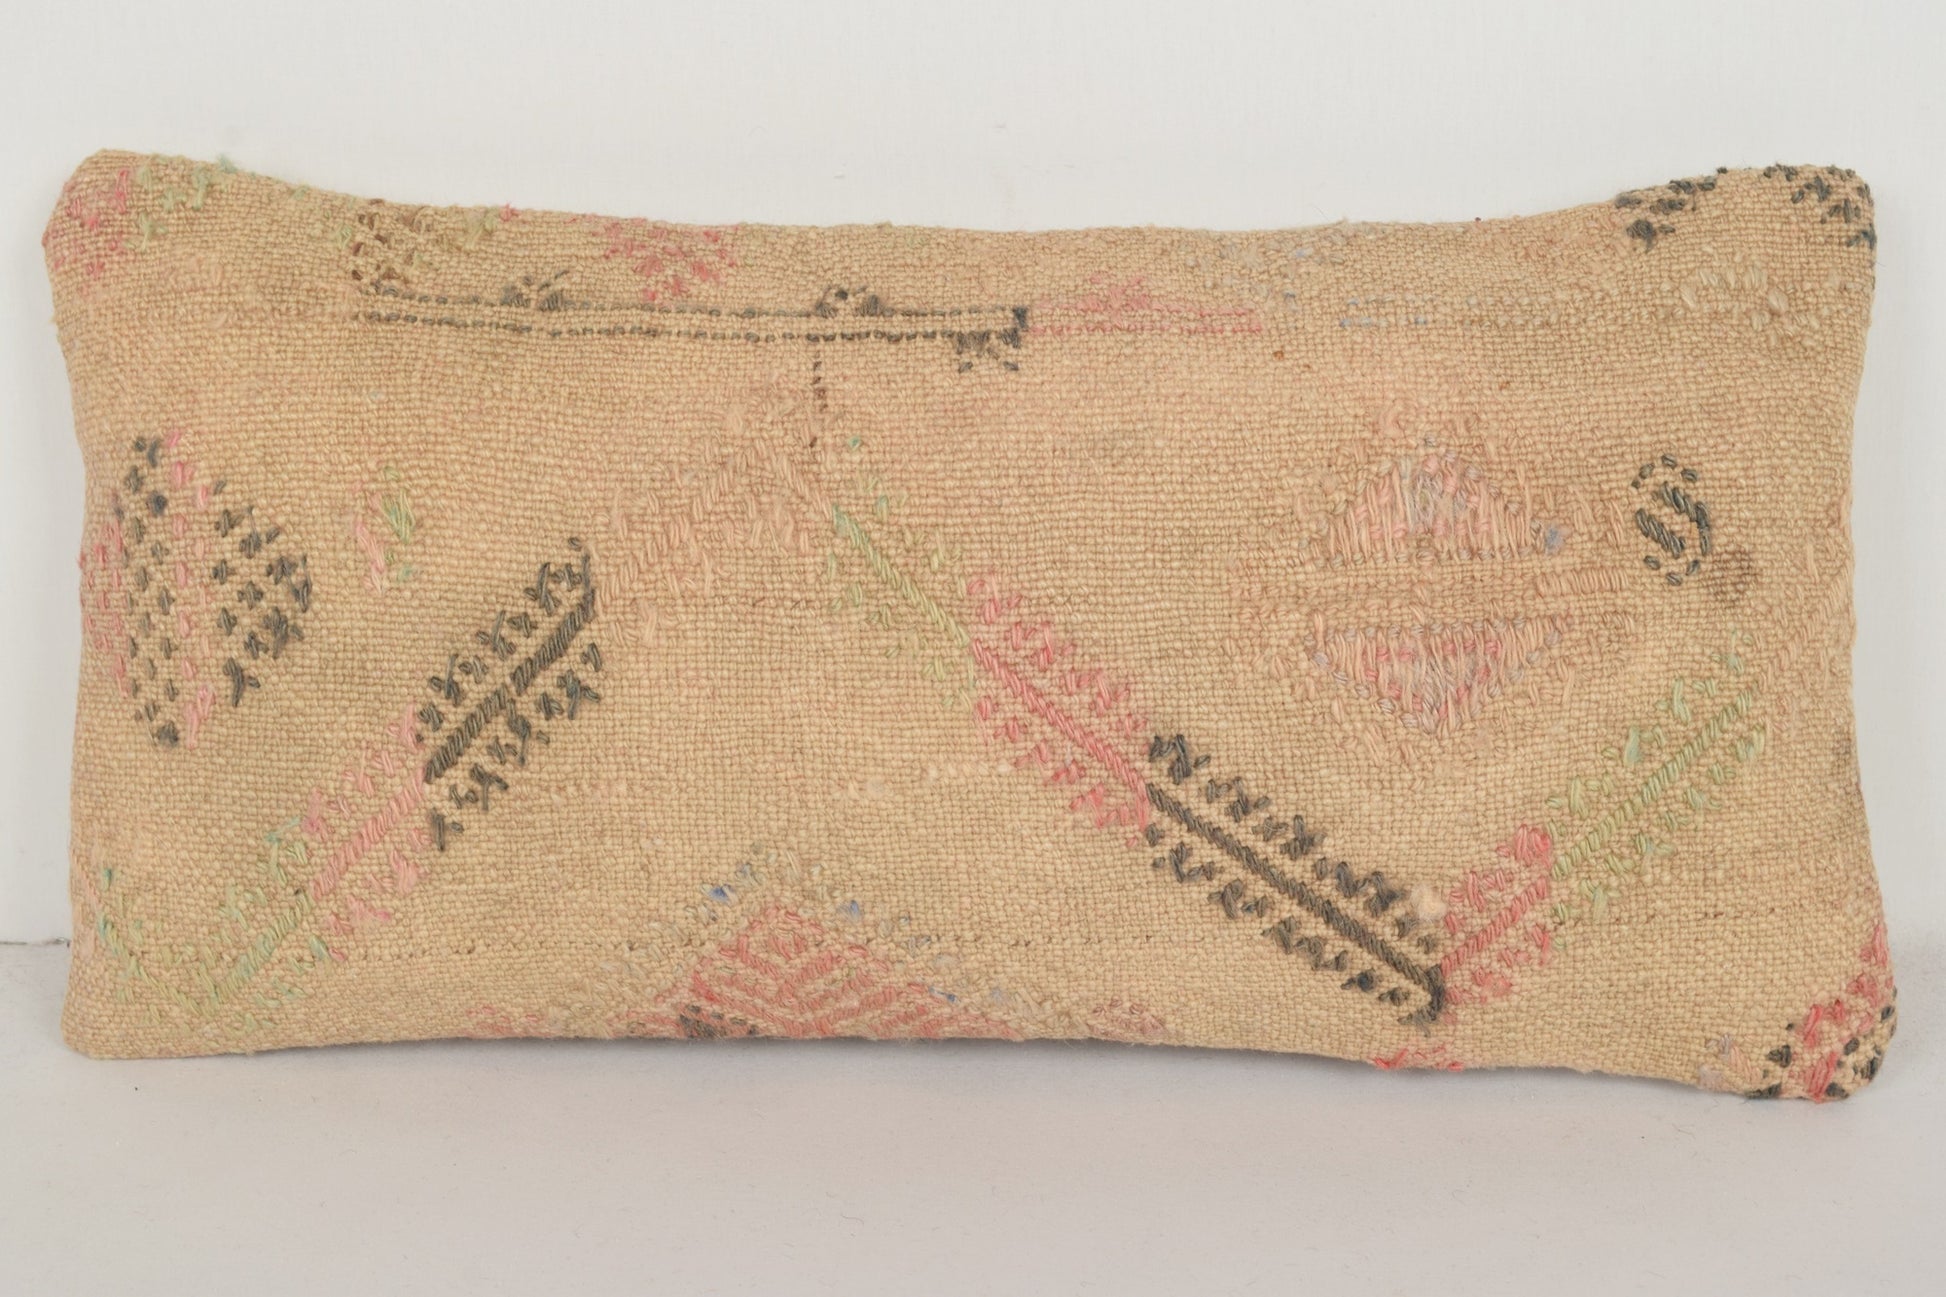 Kilim Rug Williamsburg Pillow G00531 Southwest Historical Textile Traditional Artist